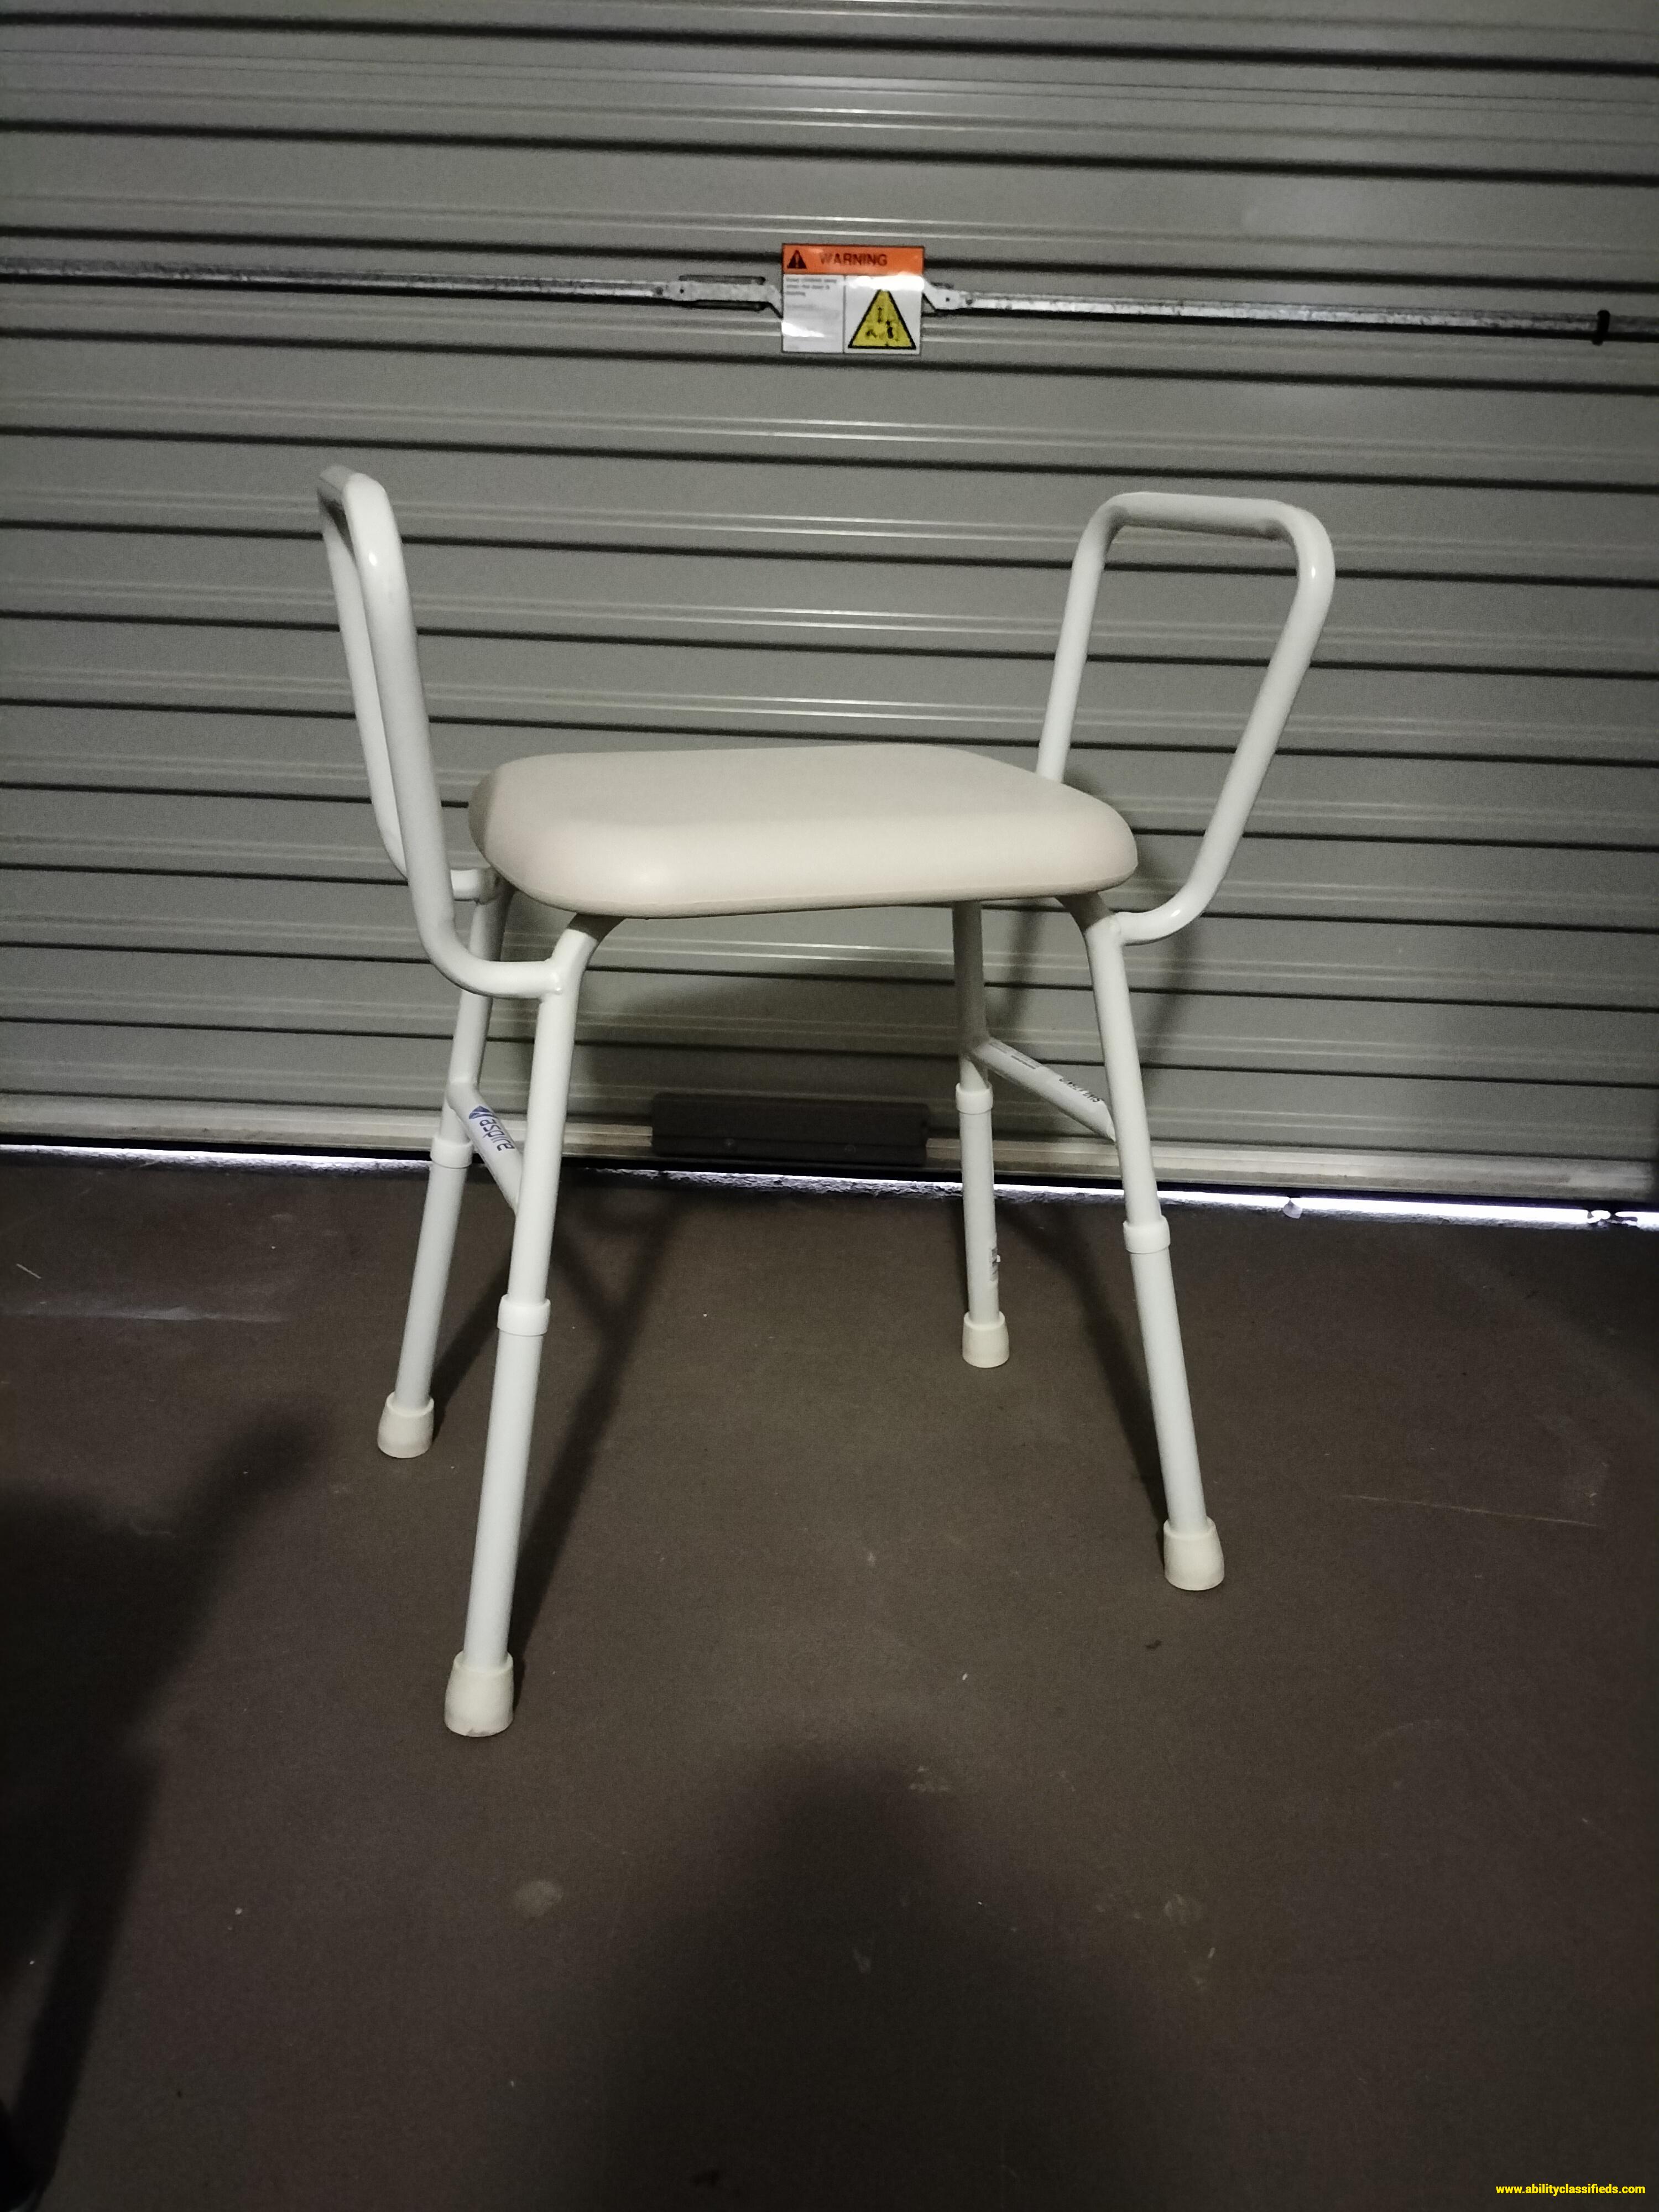 Height adjustable padded shower stool